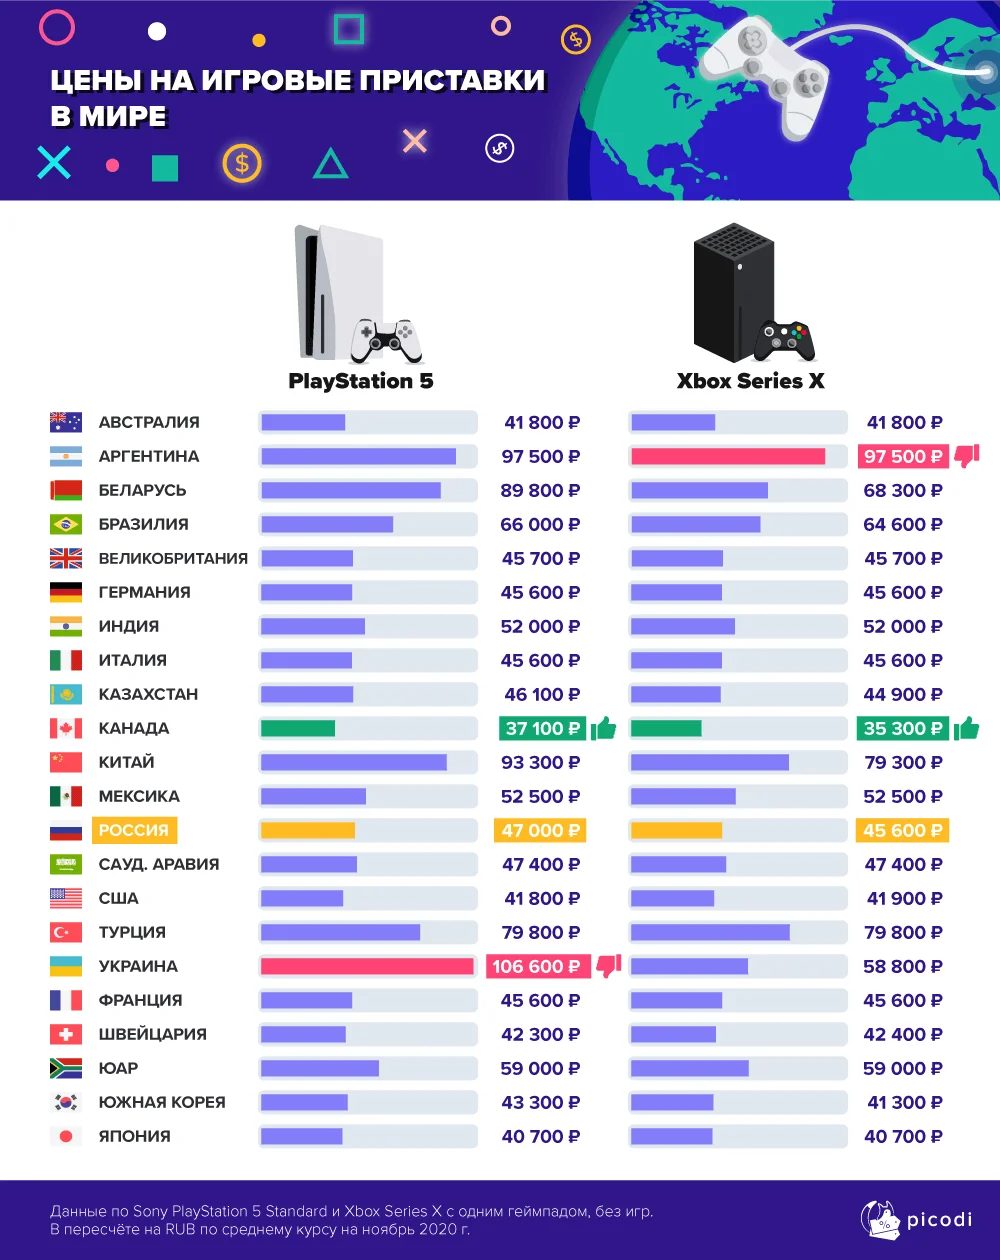 Опубликовано сравнение цен PlayStation 5 и Xbox Series X в разных странах мира - фото 1